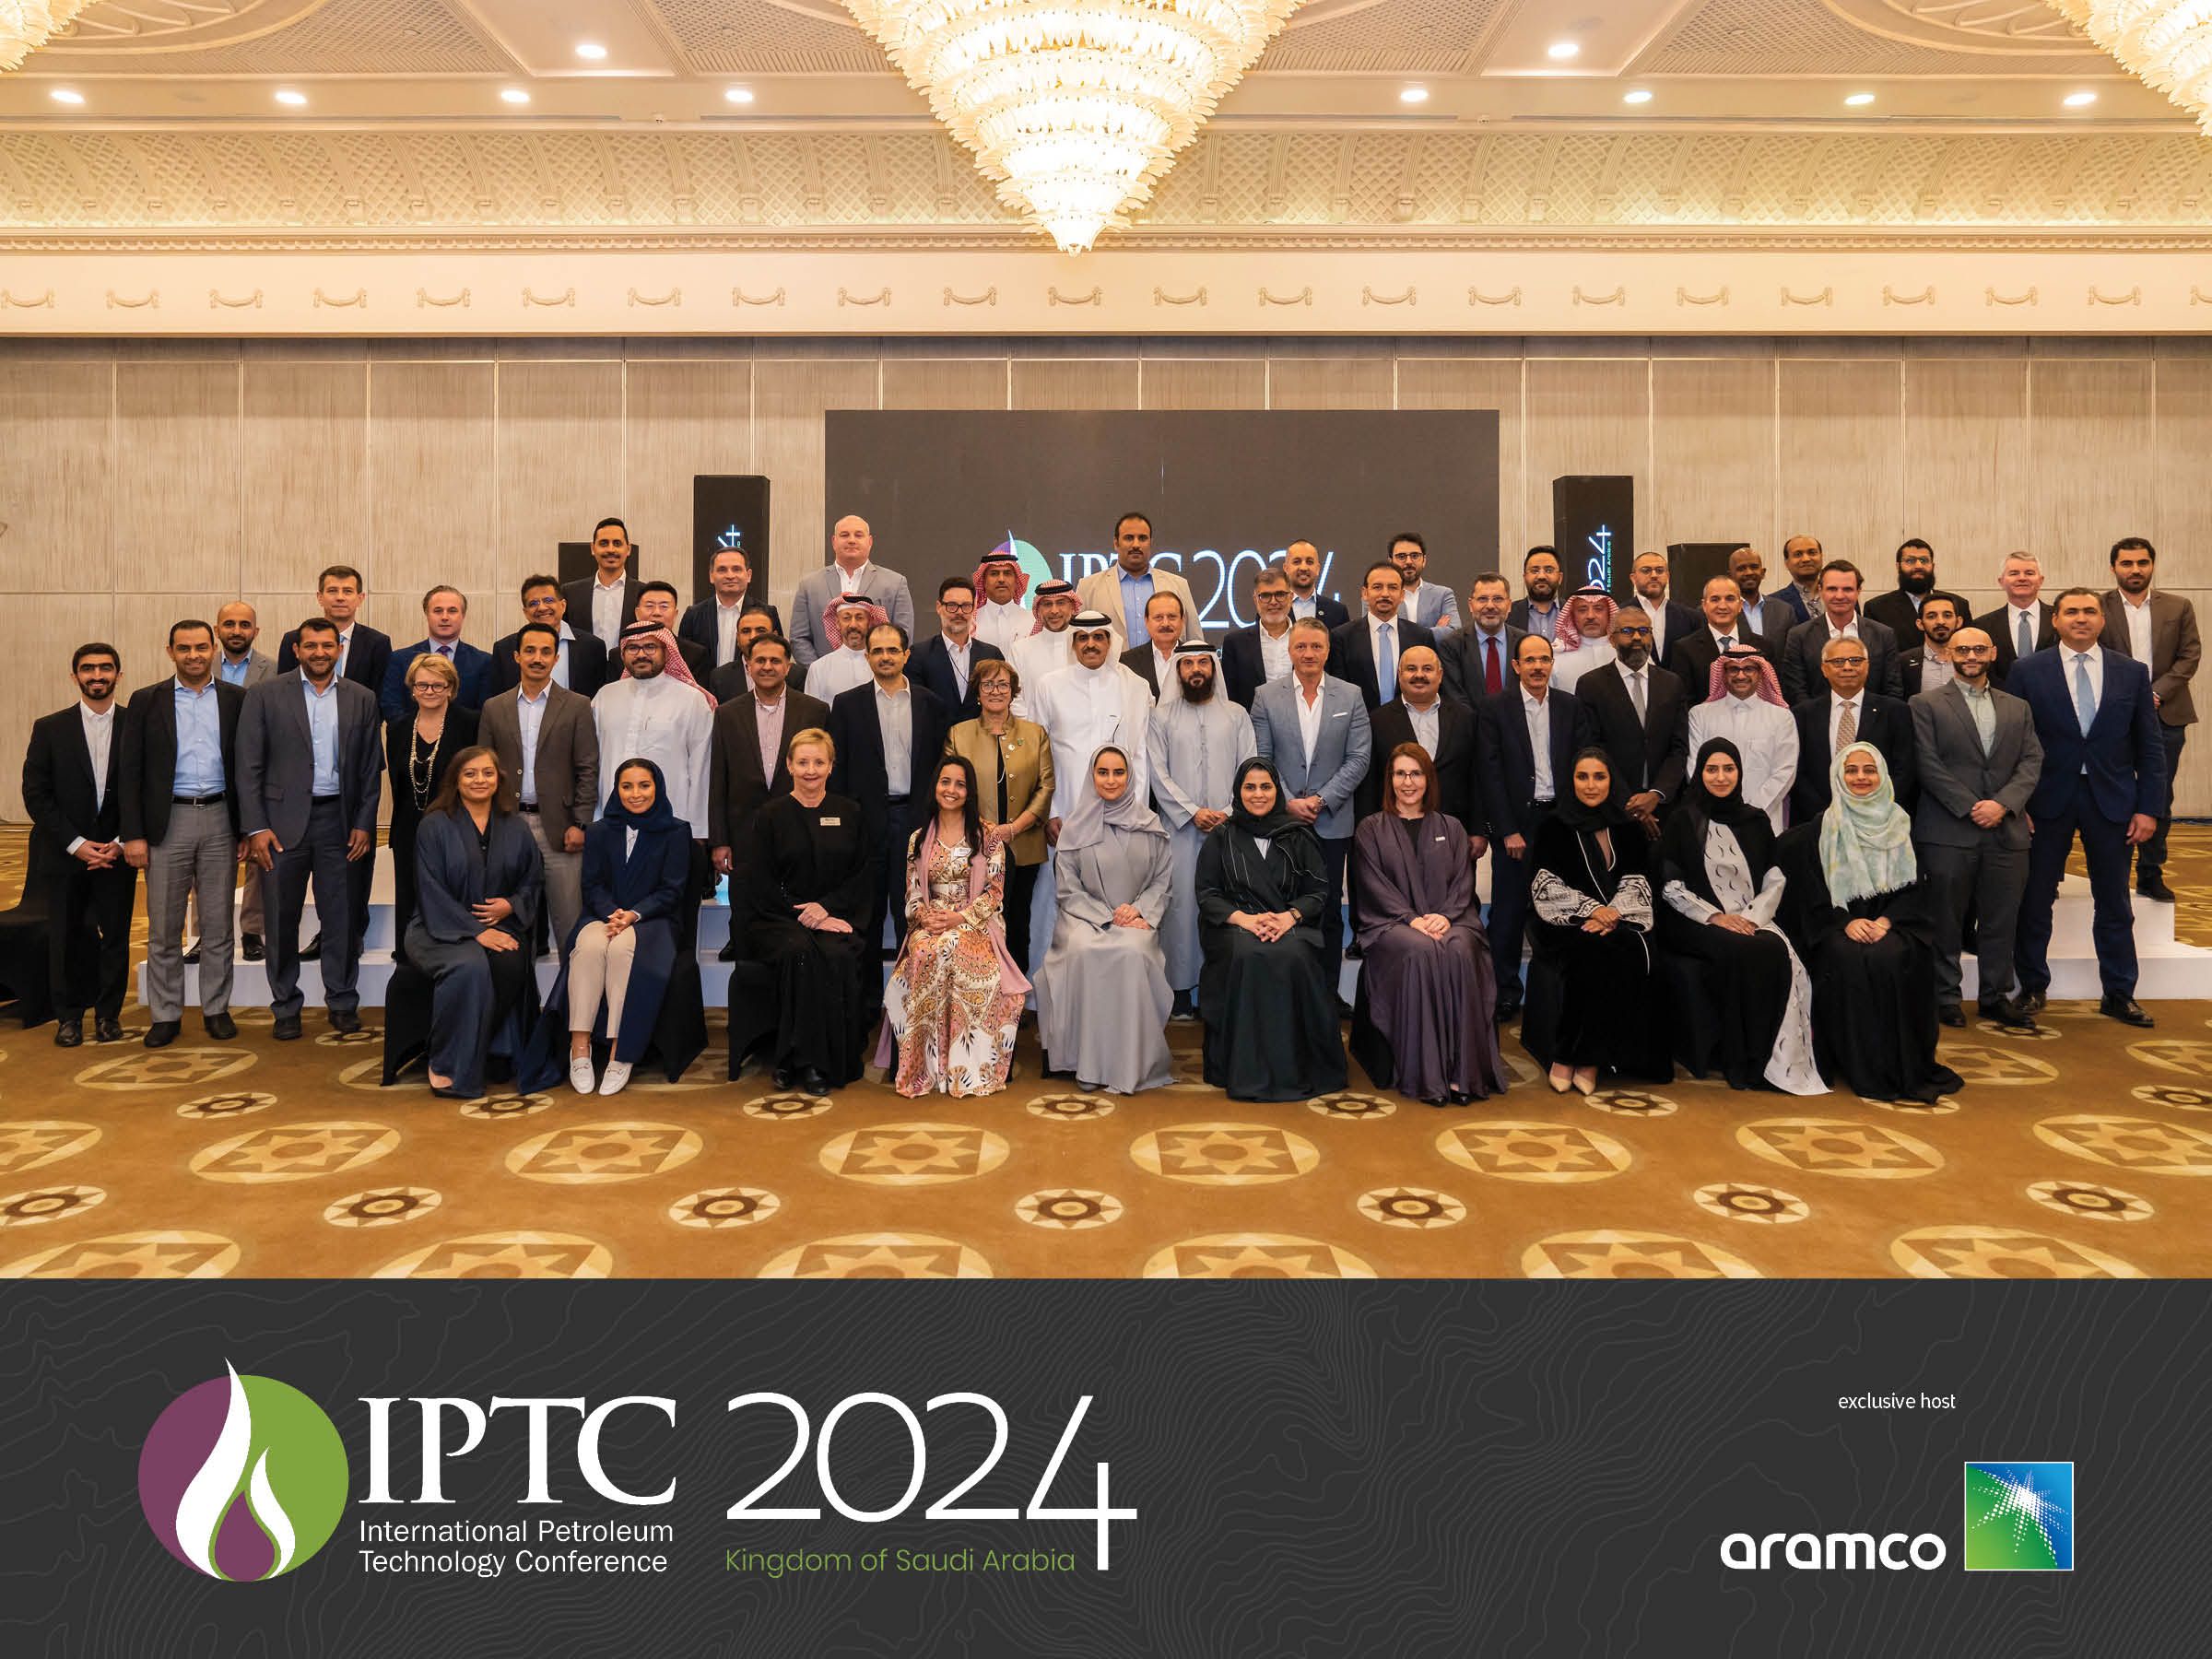 IPTC 2024 Executive Committee Group Photo